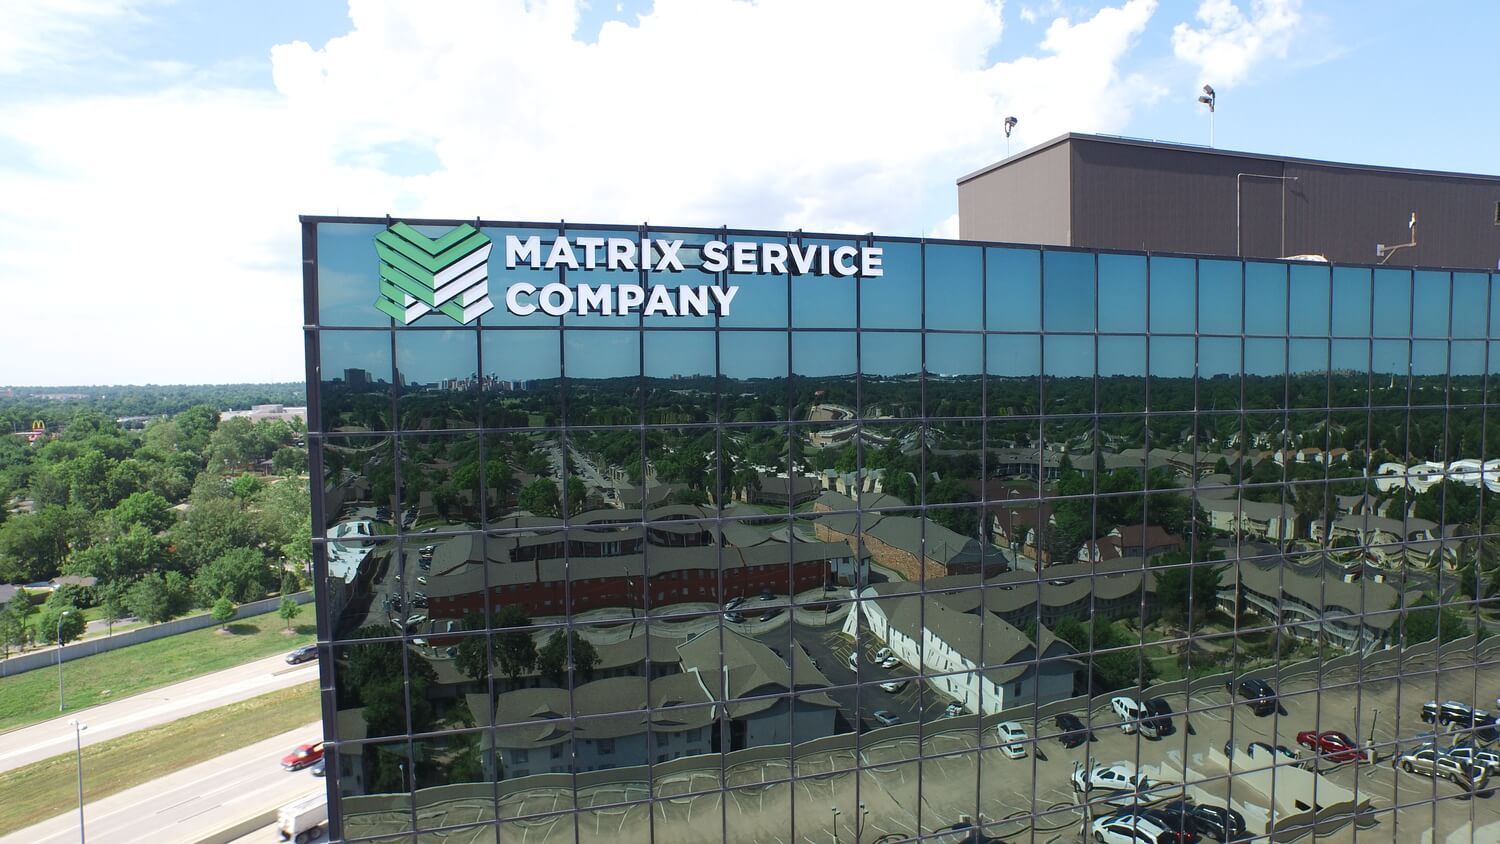 Outdoor shot of the Matrix Service Company Building